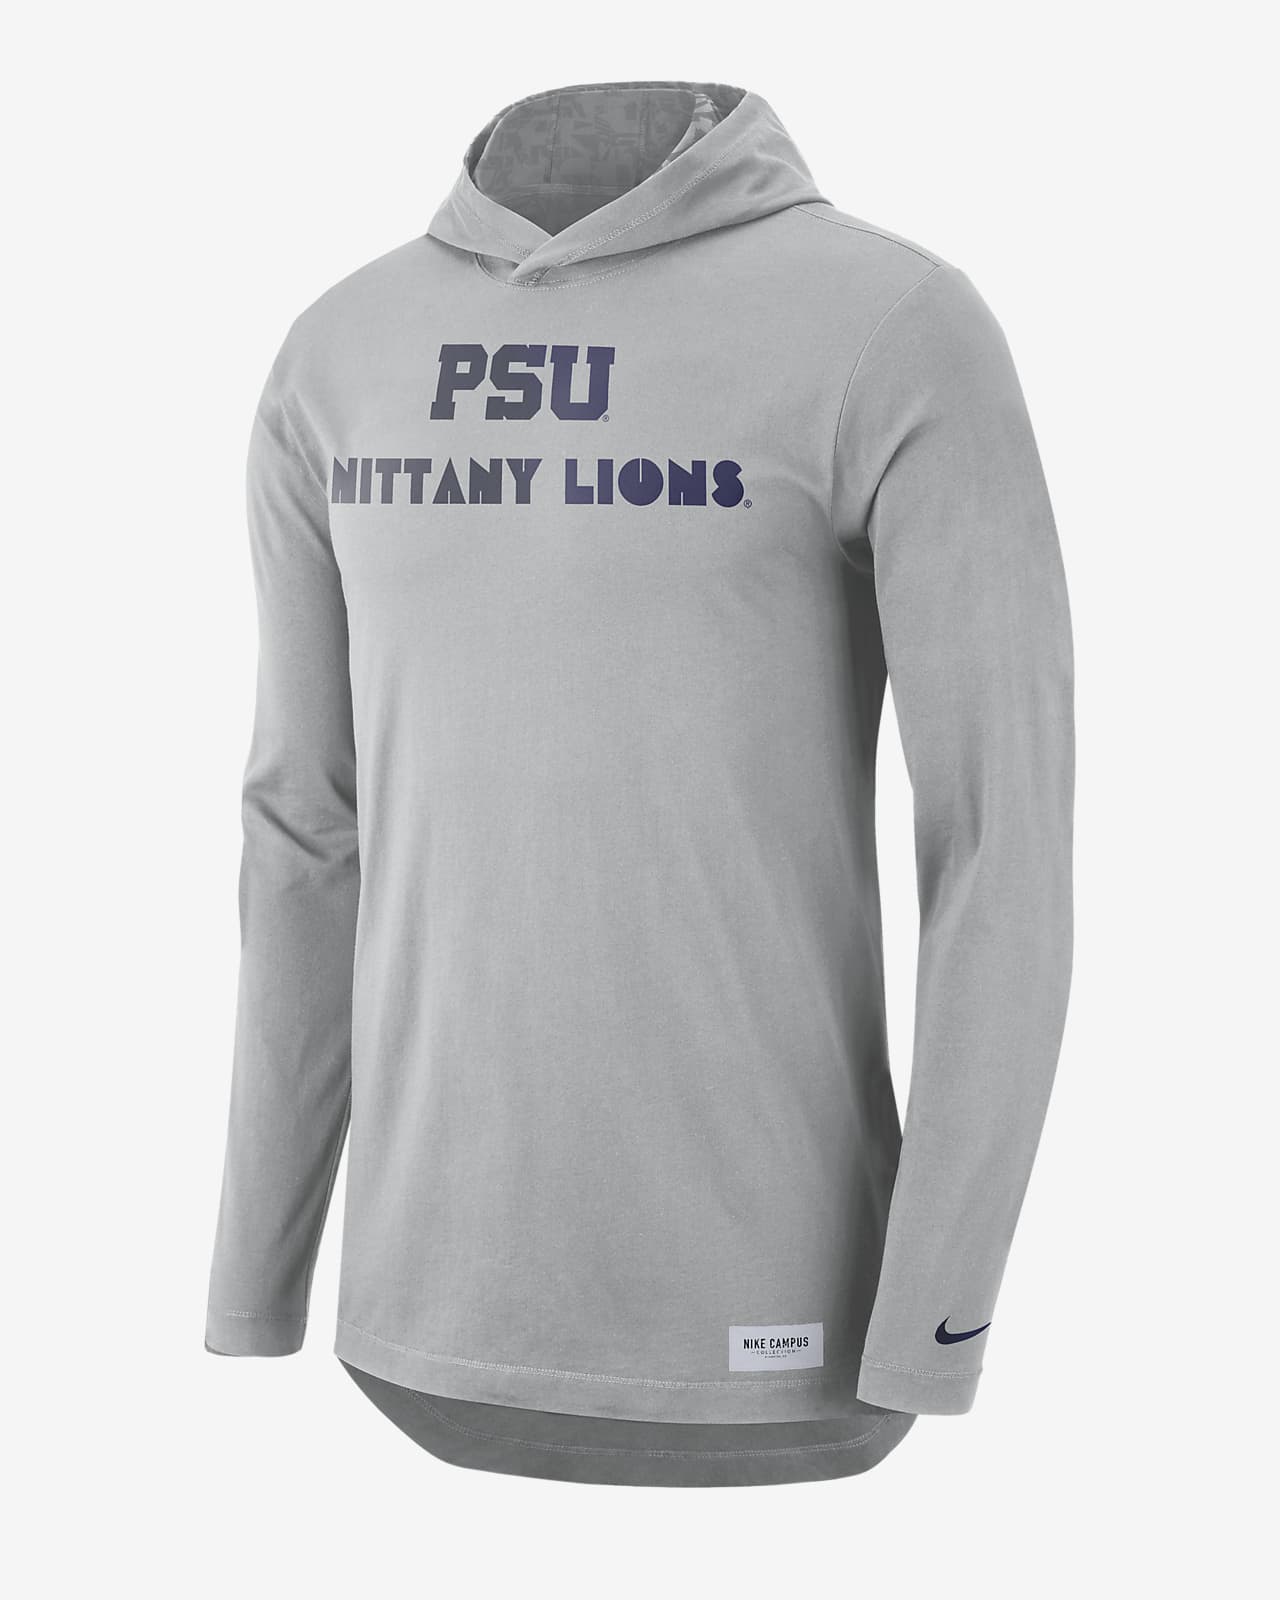 Nike College Dri-FIT (Penn State) Men's Long-Sleeve Hooded T-Shirt